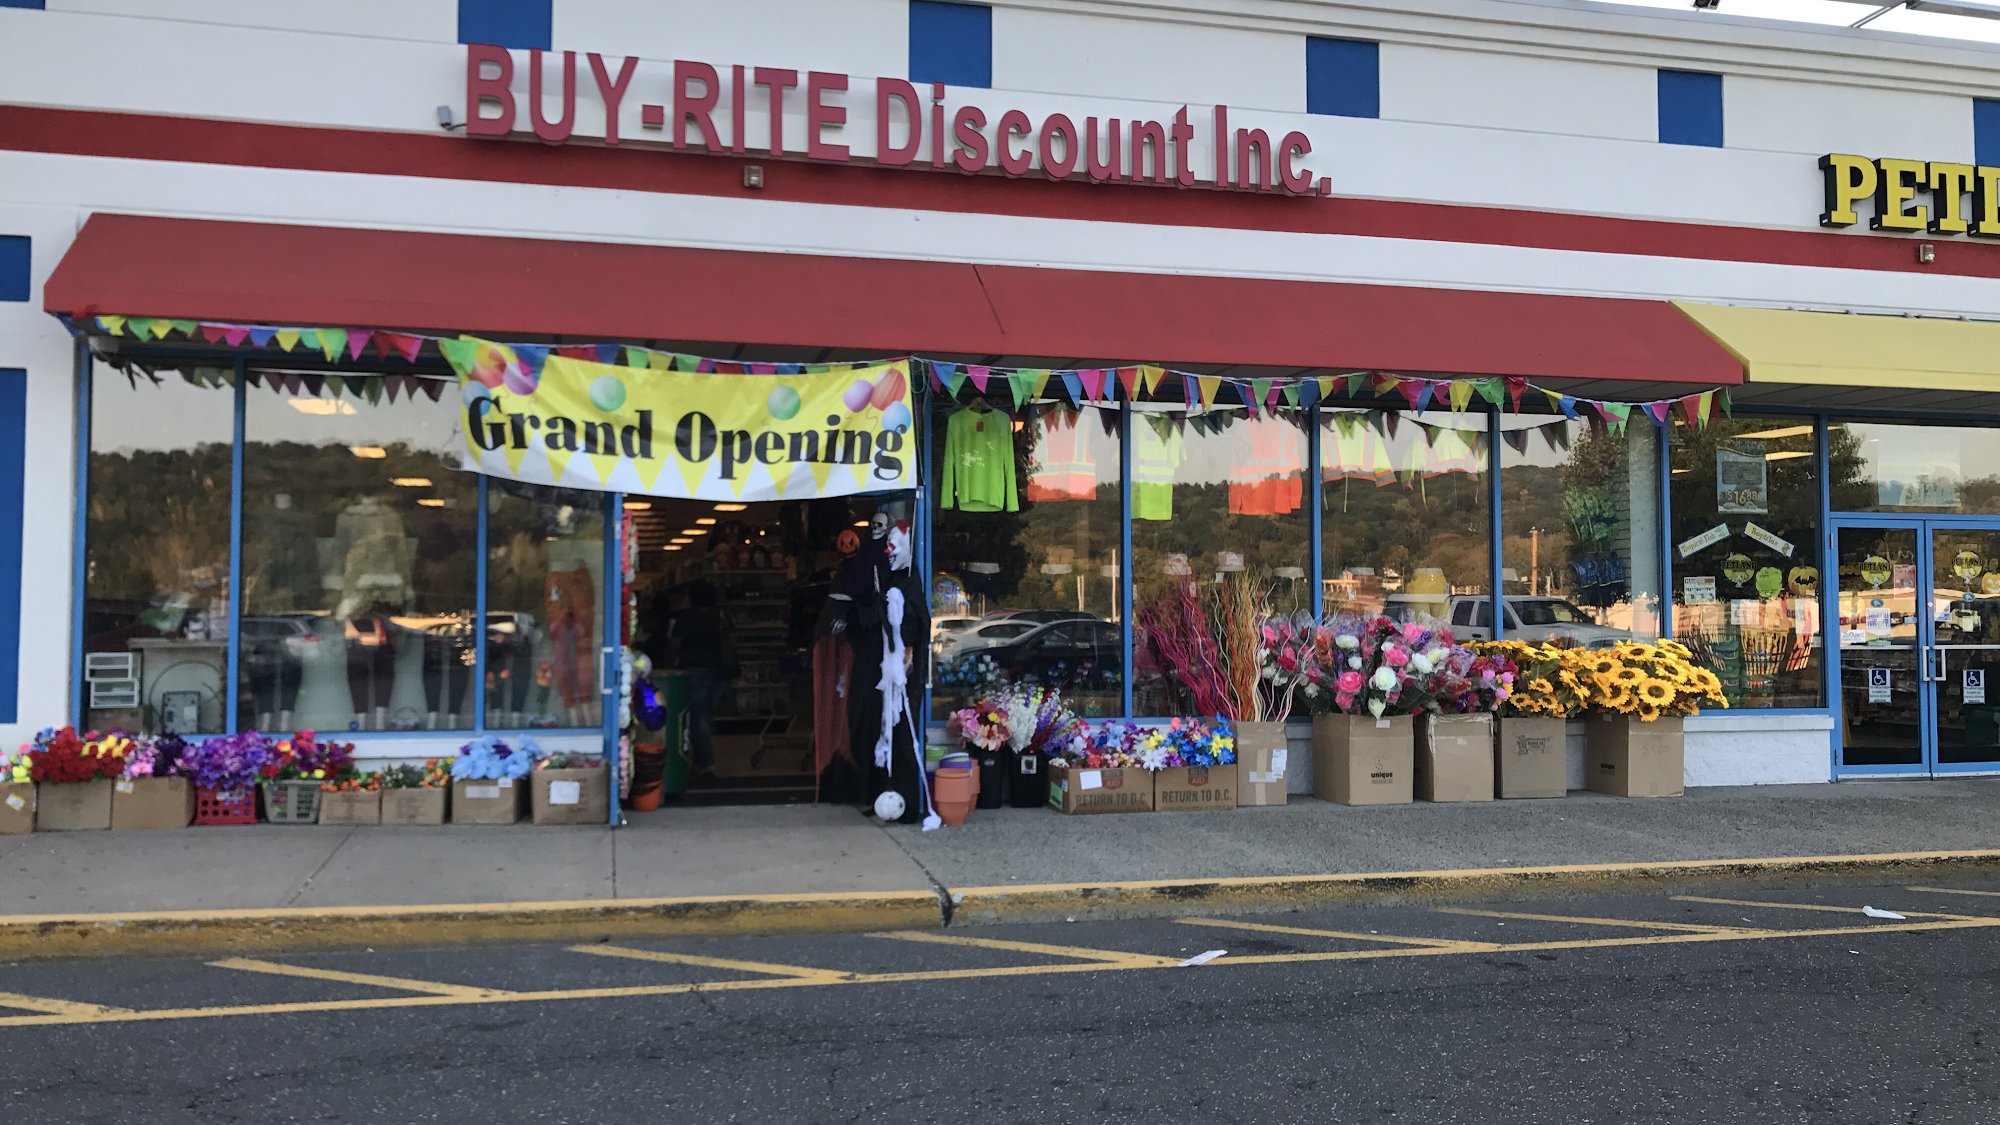 Buy-rite discount store